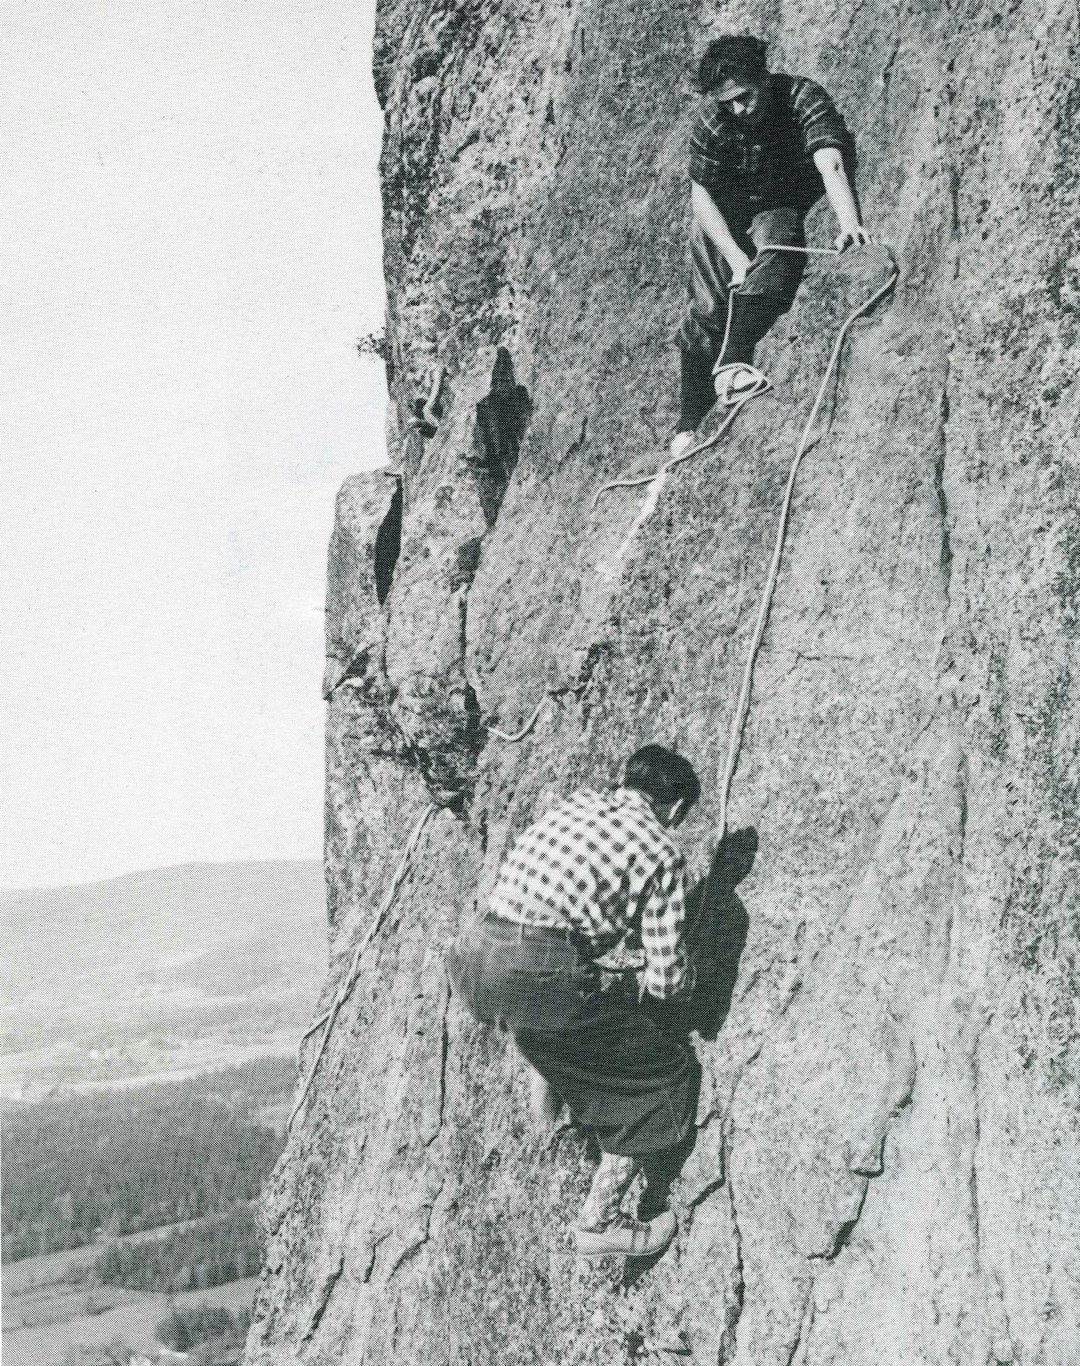 Klassiker: Per Hohle sikrer Arne Næss på Storesvaet i Sydstupet i 1940. Foto: E. Rothman.